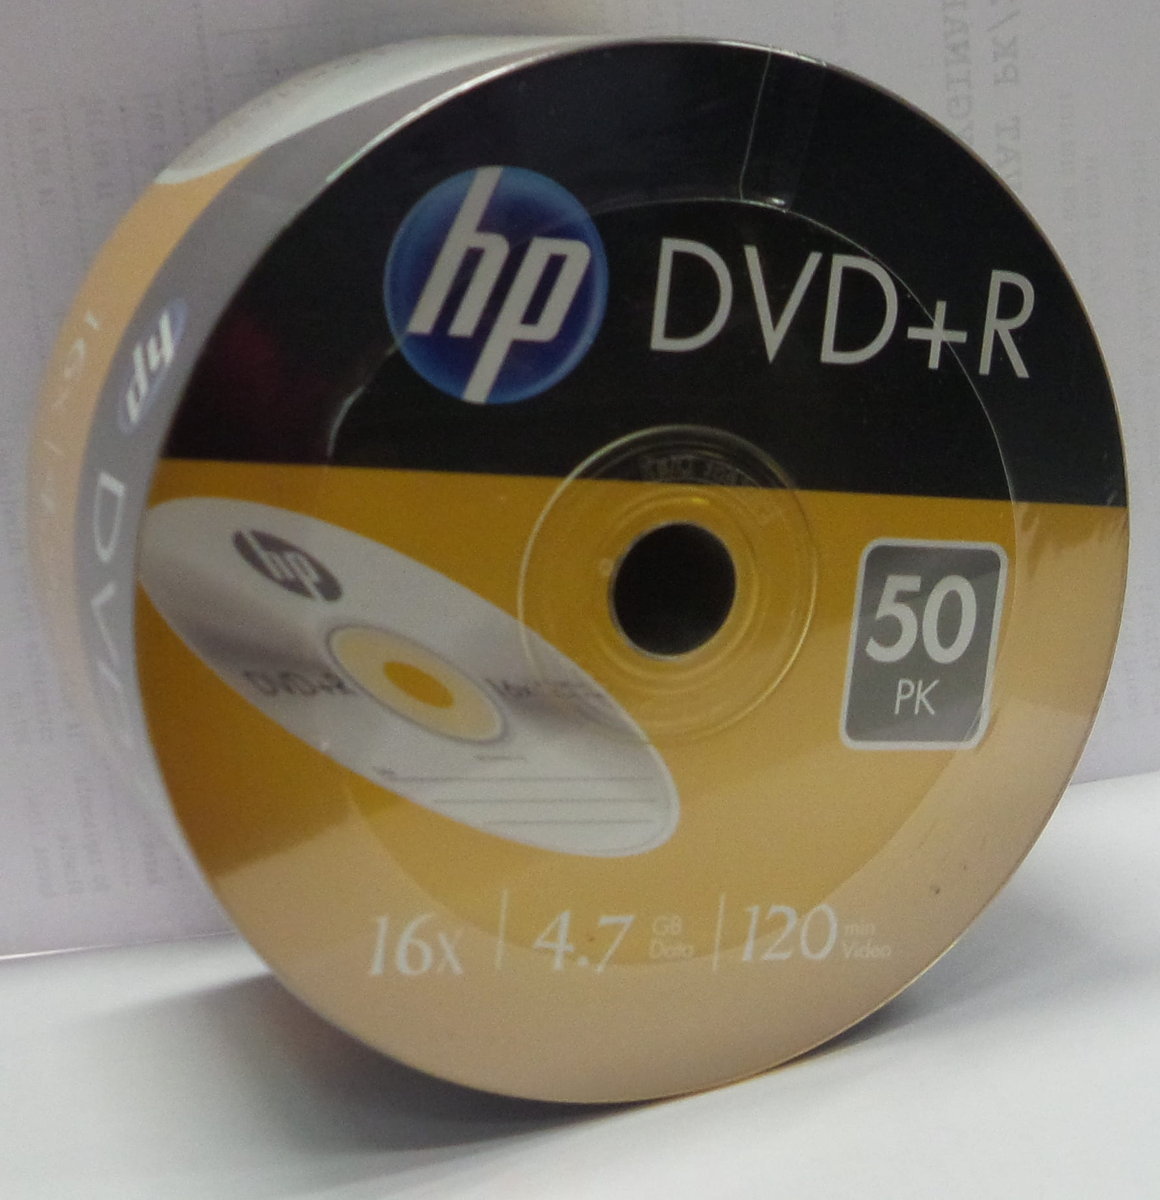 Фото - Навушники HP DVD+R x16 4,7GB s-50 14220 69305 